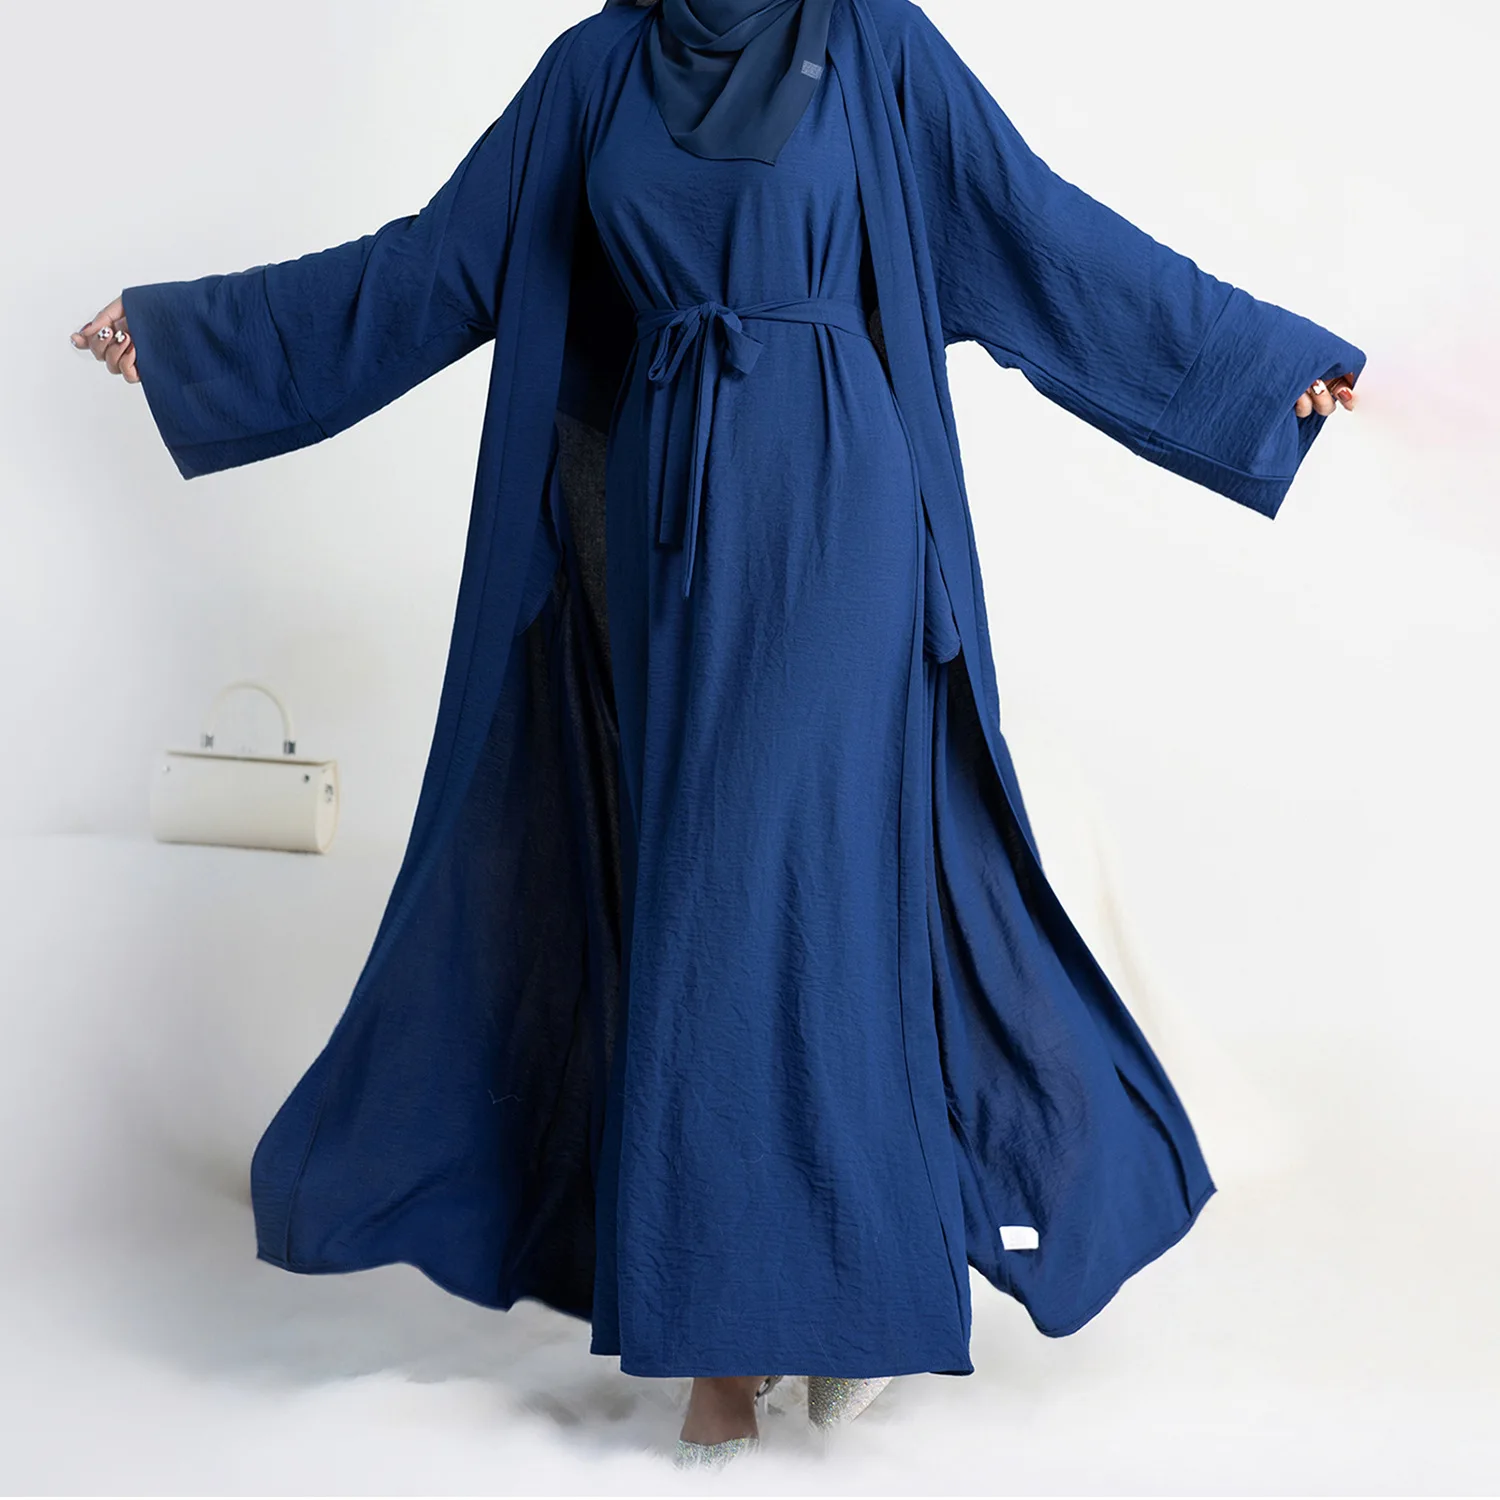 Ramadan Eid Djellaba Suits Abaya Dubai Two pieces Muslim Sets Dress Abaya Dubai Turkey Muslim Islam Abayas With Belt WY604